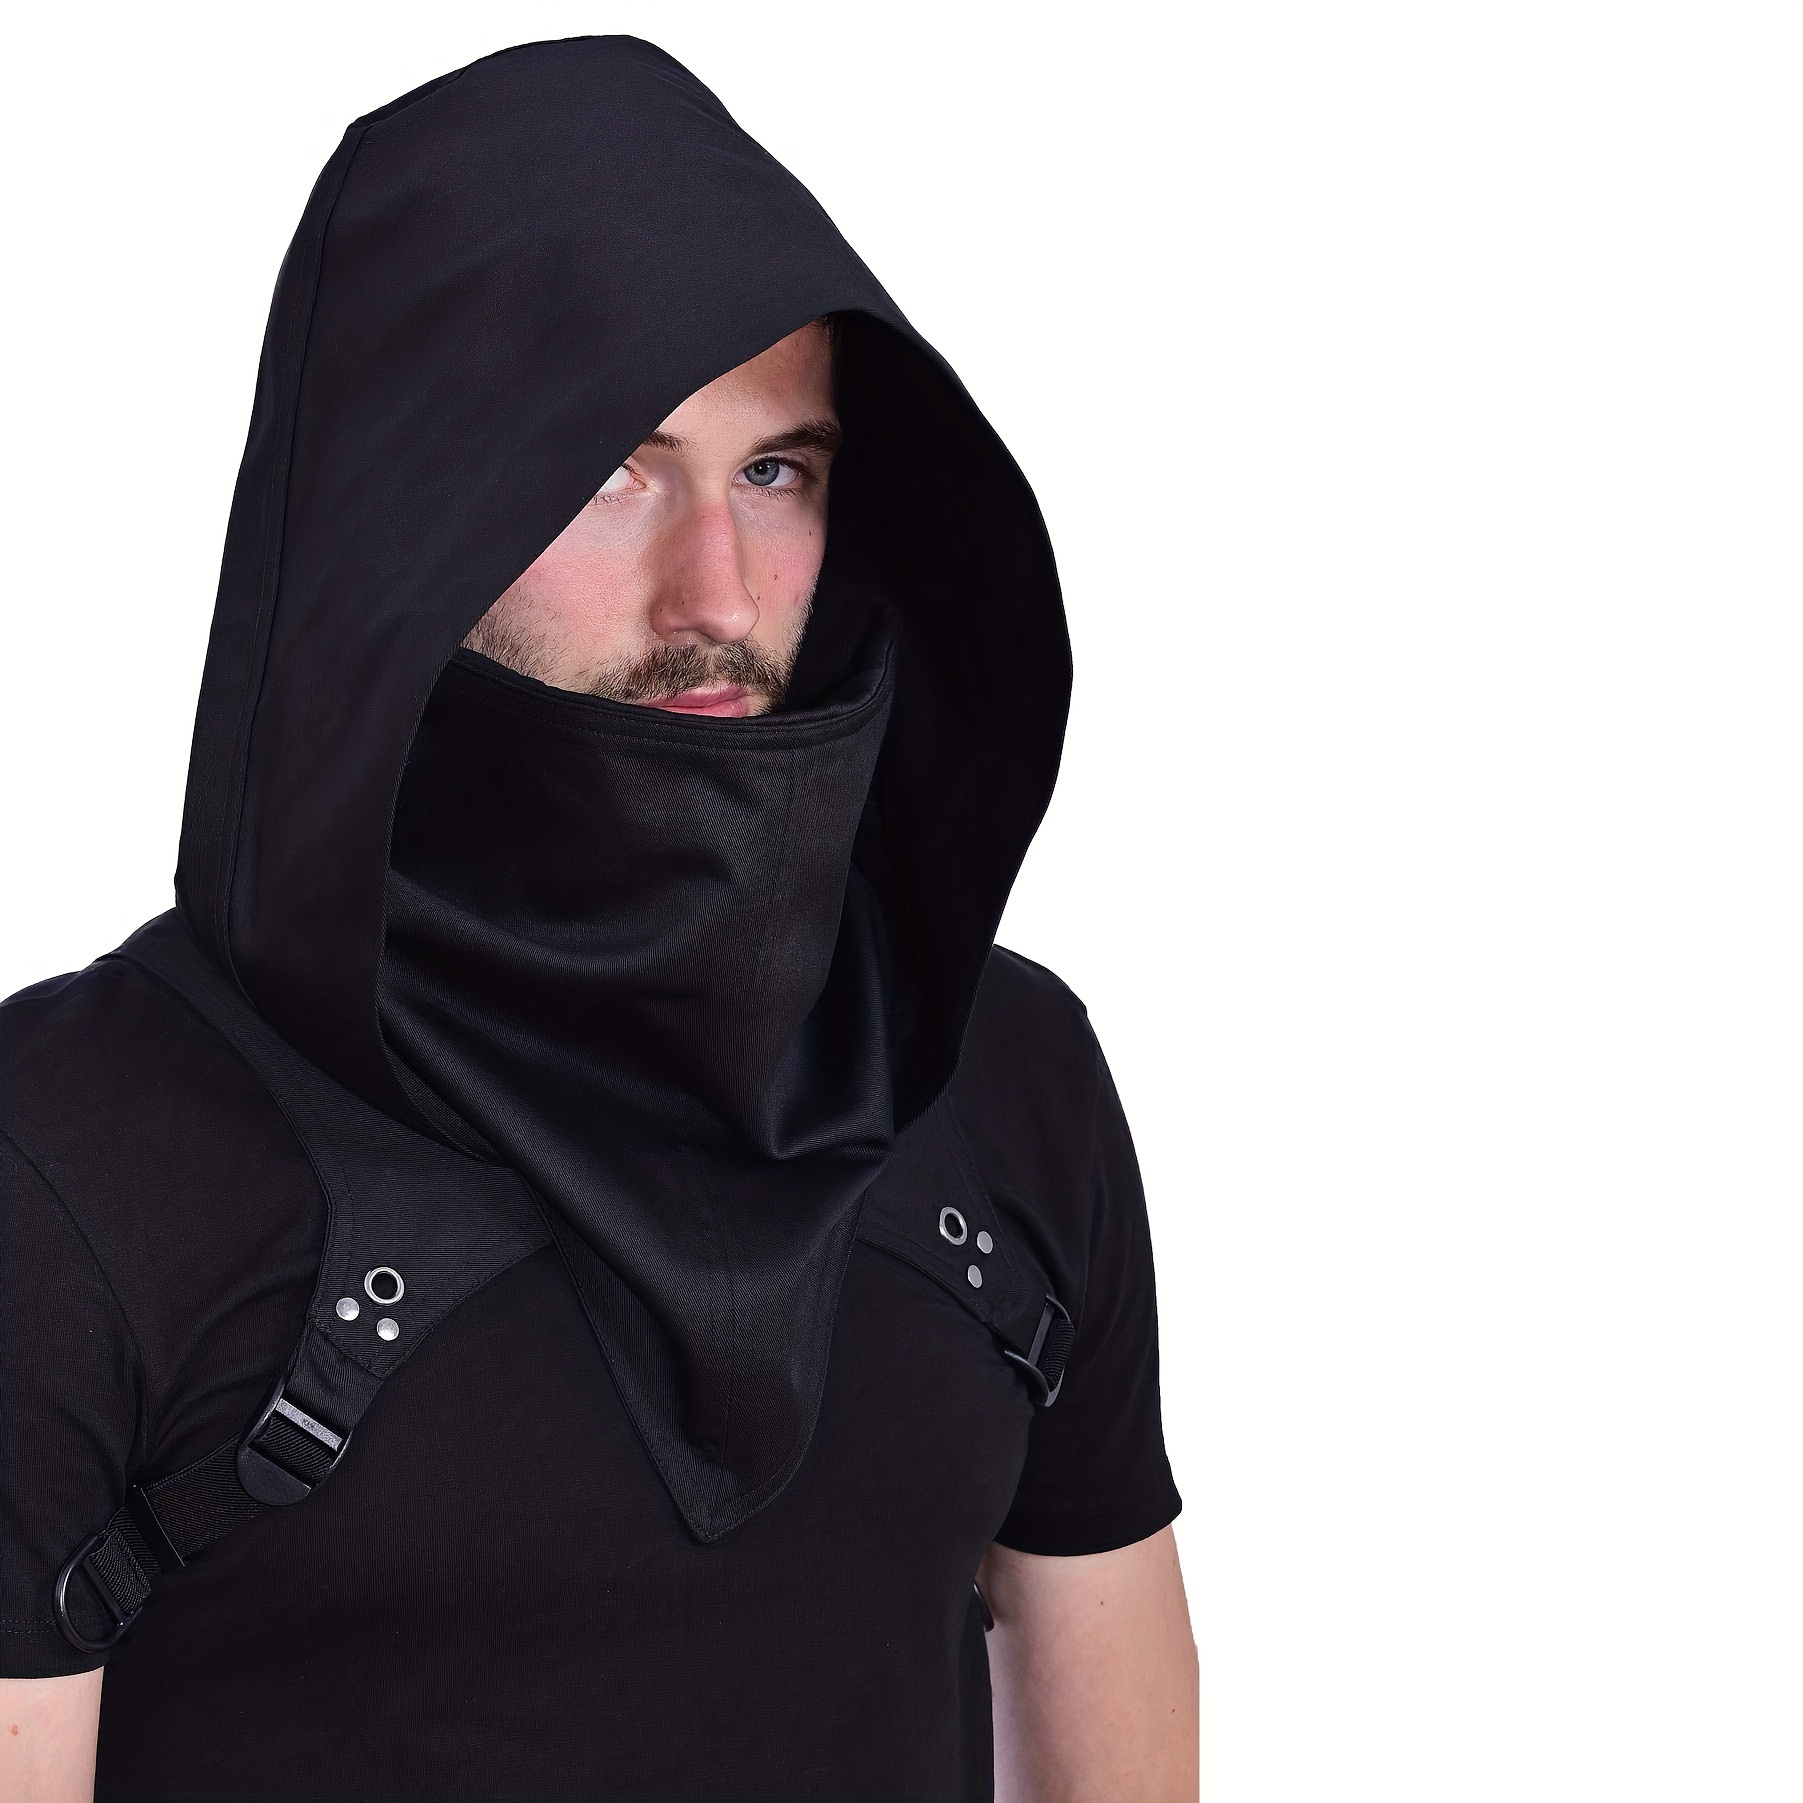 YAIZLBCA Cyberpunk Rogue Cowl Hood Scarf, Assassin Costume Hood Winter Unisex Cloak Hat for Cosplay and Outdoor Daily Wear